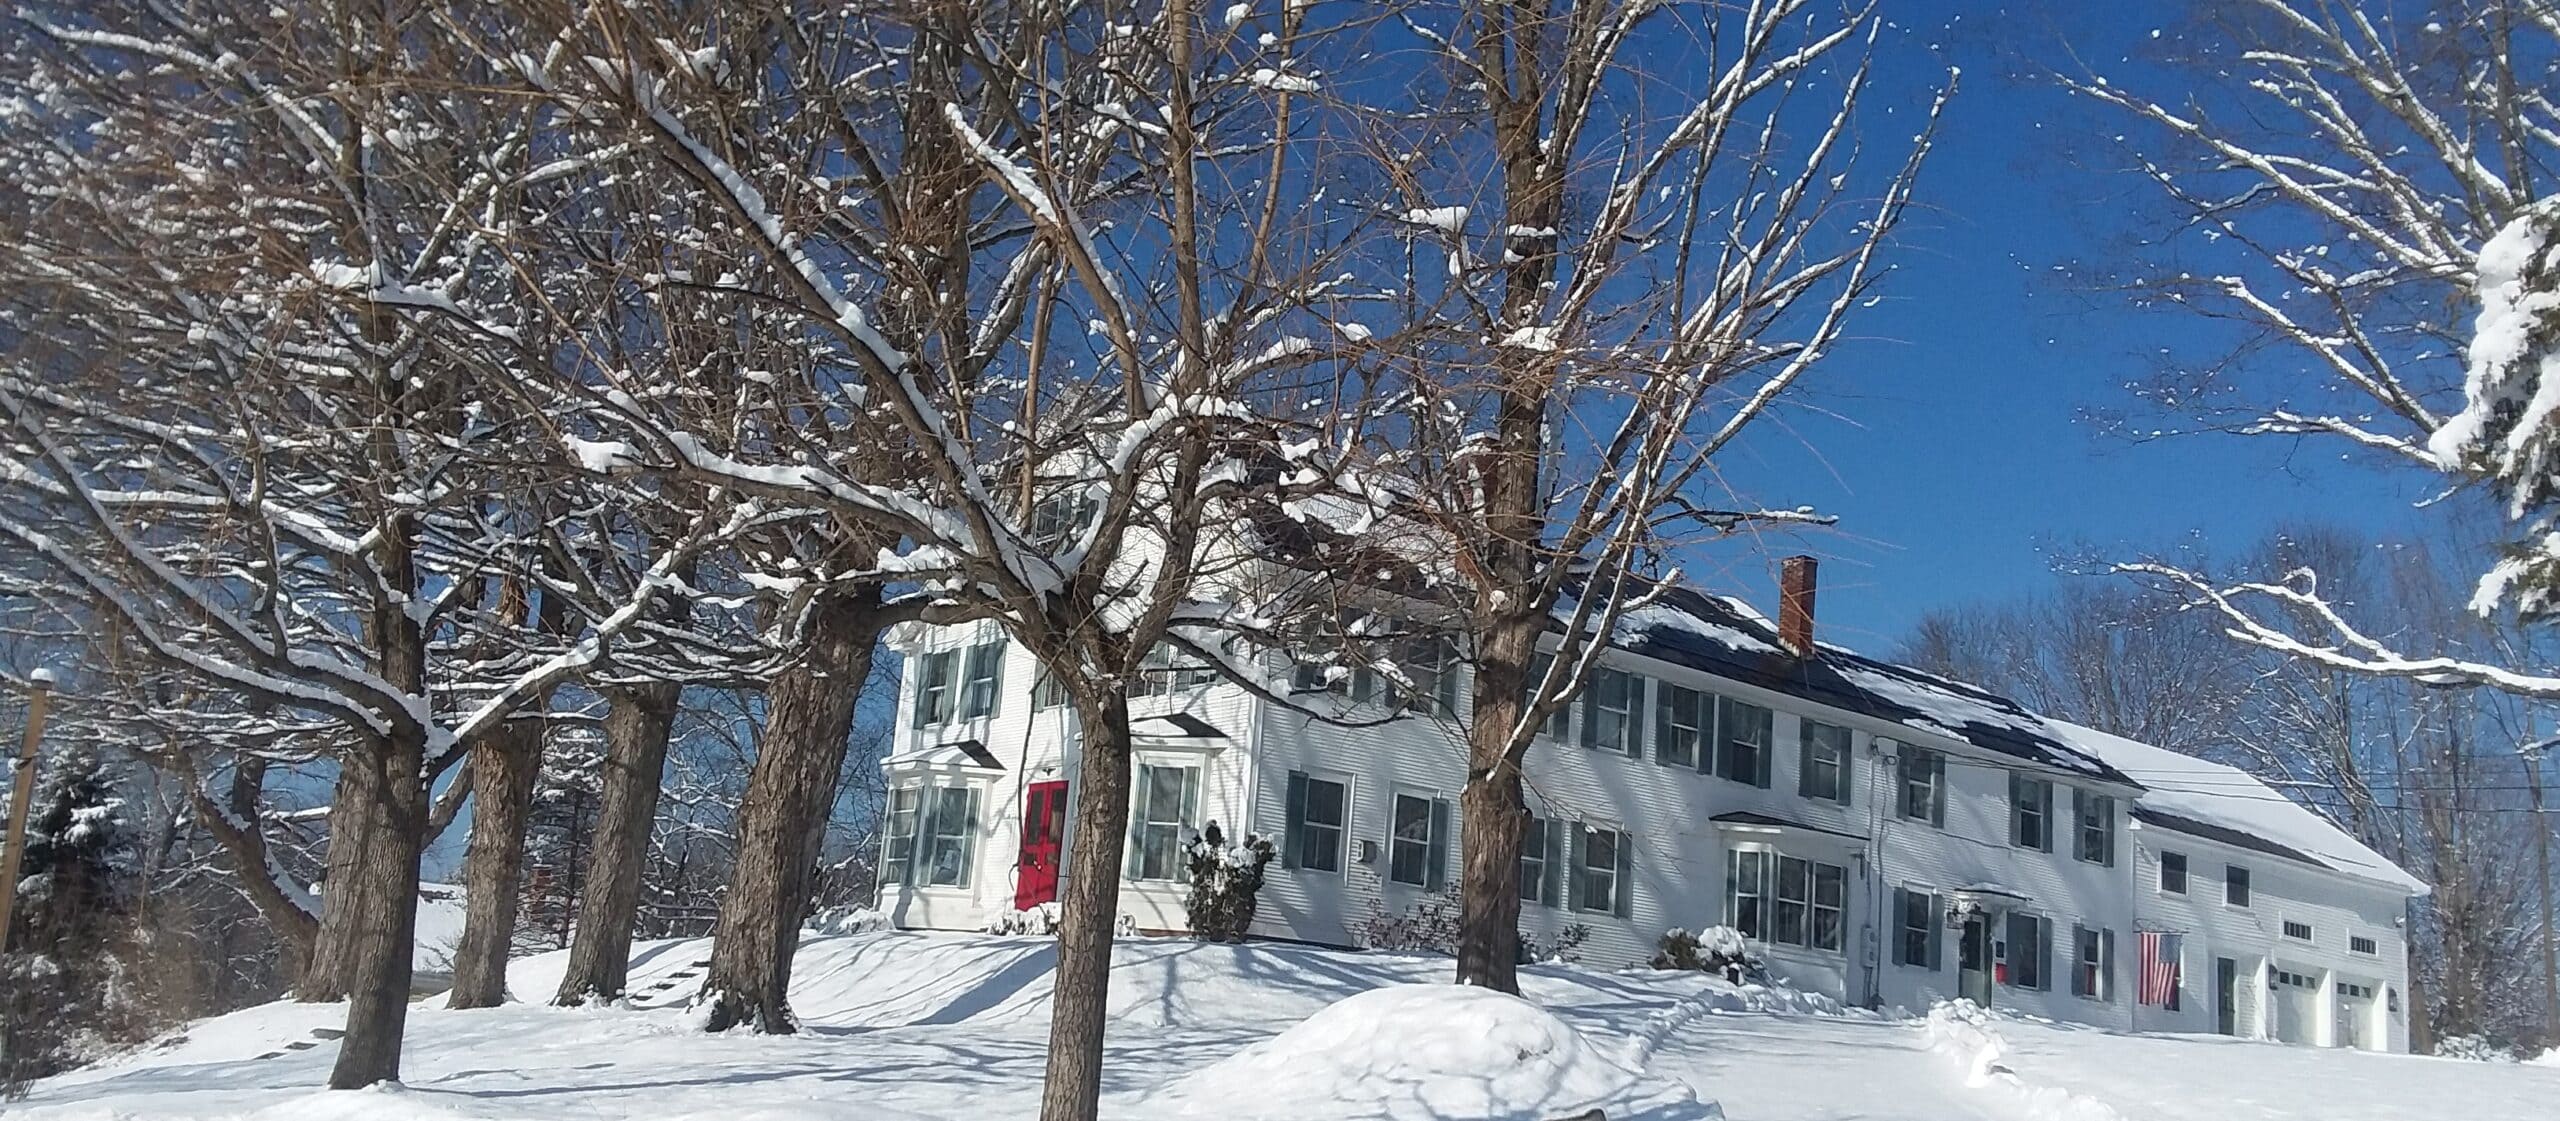 Winter inn with blue sky and snow